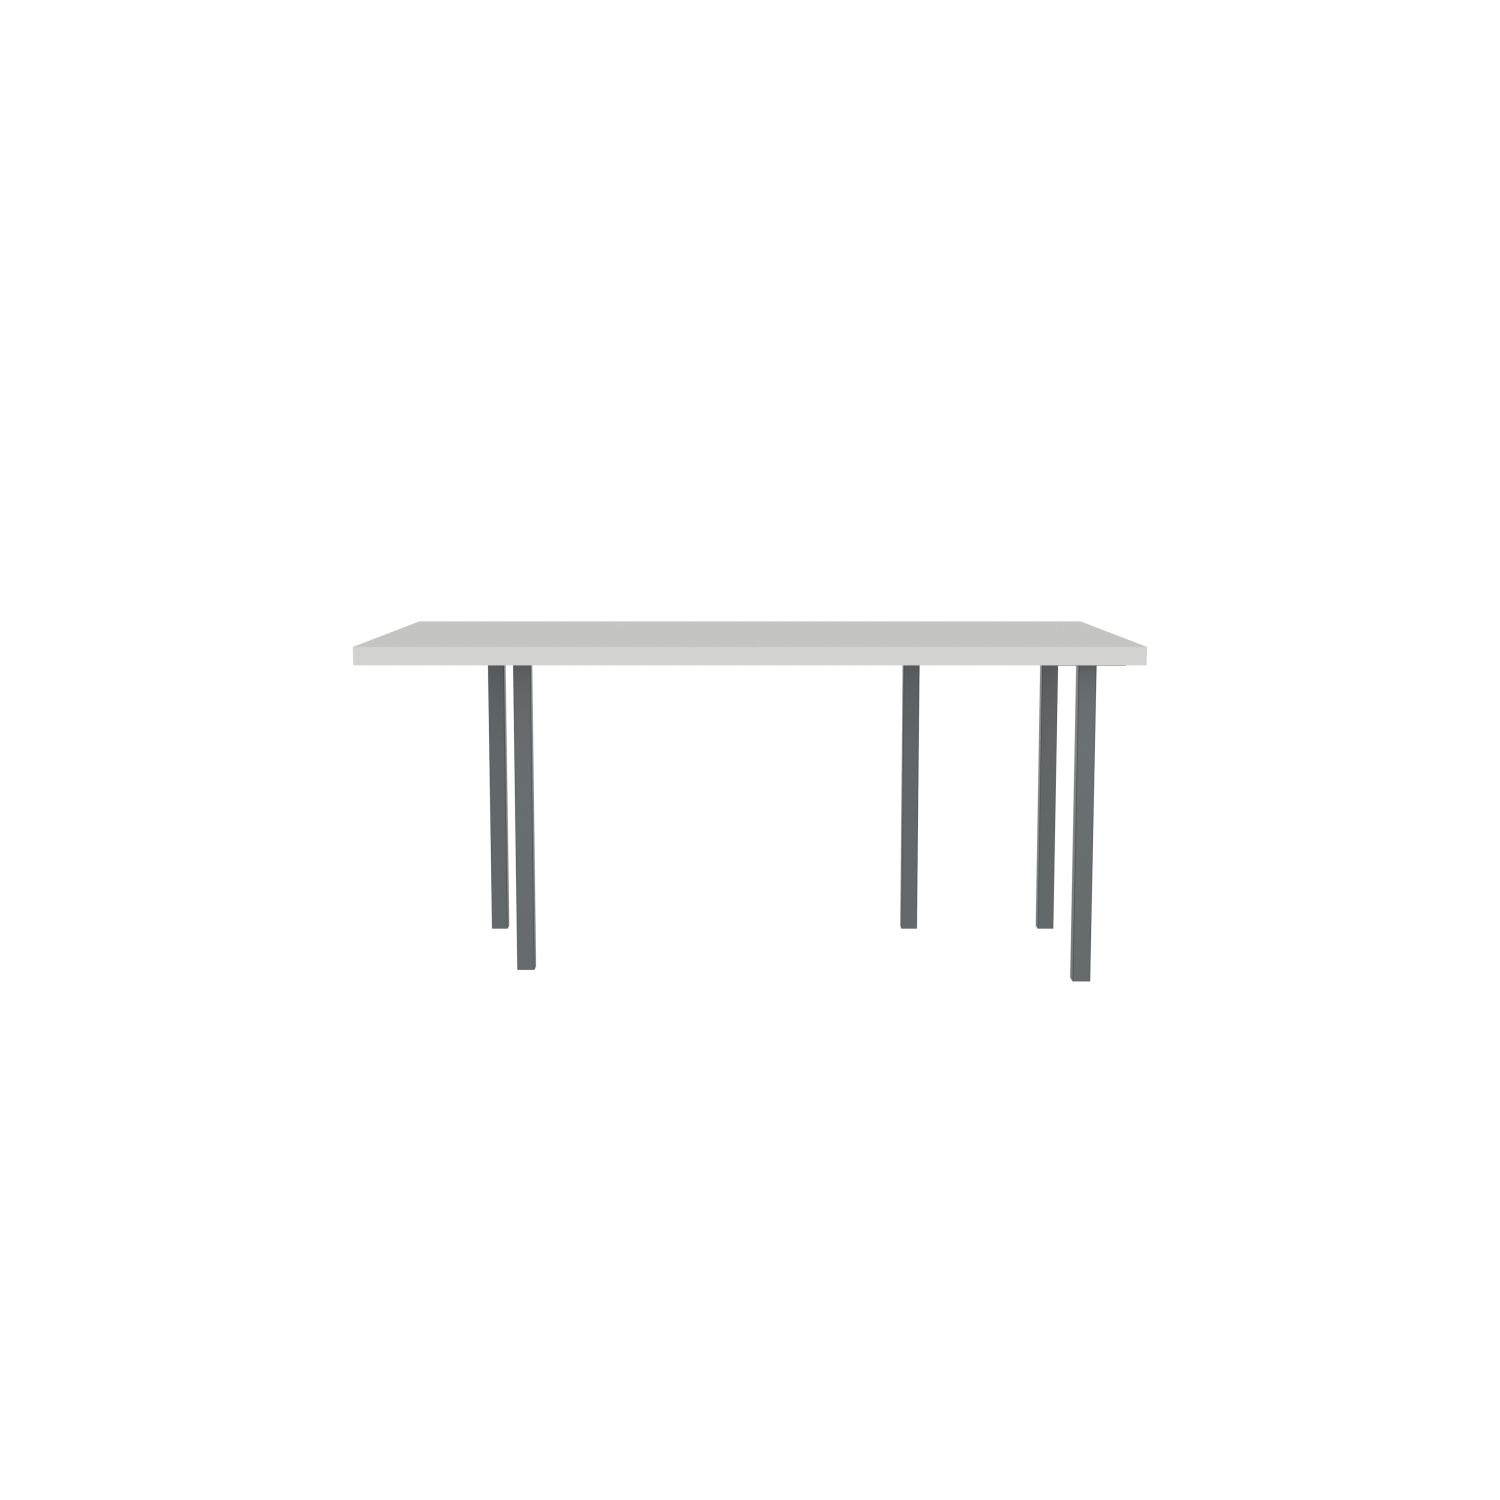 lensvelt bbrand table five fixed heigt 915x172 hpl boring grey 50 mm price level 1 dark grey ral7011